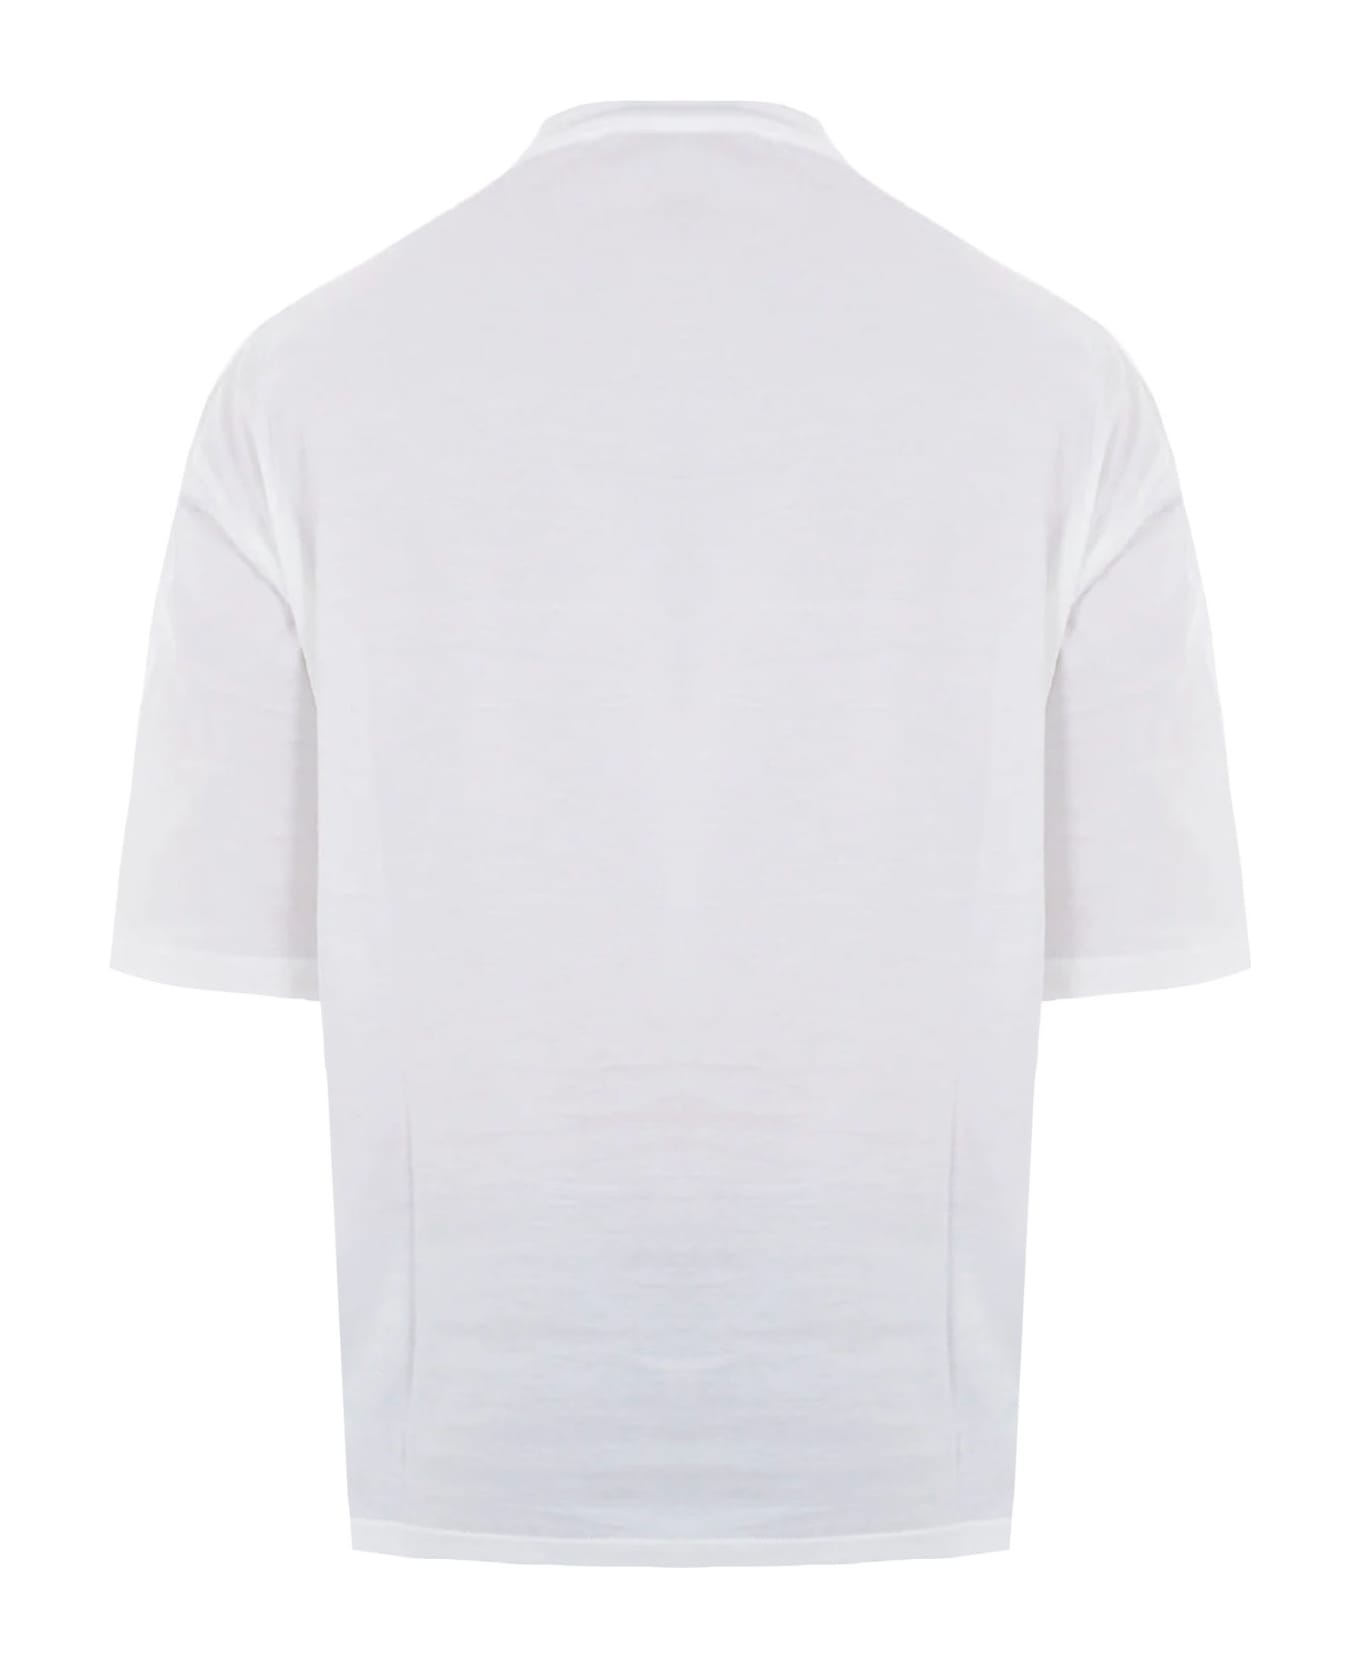 Low Brand White Cotton T-shirt シャツ